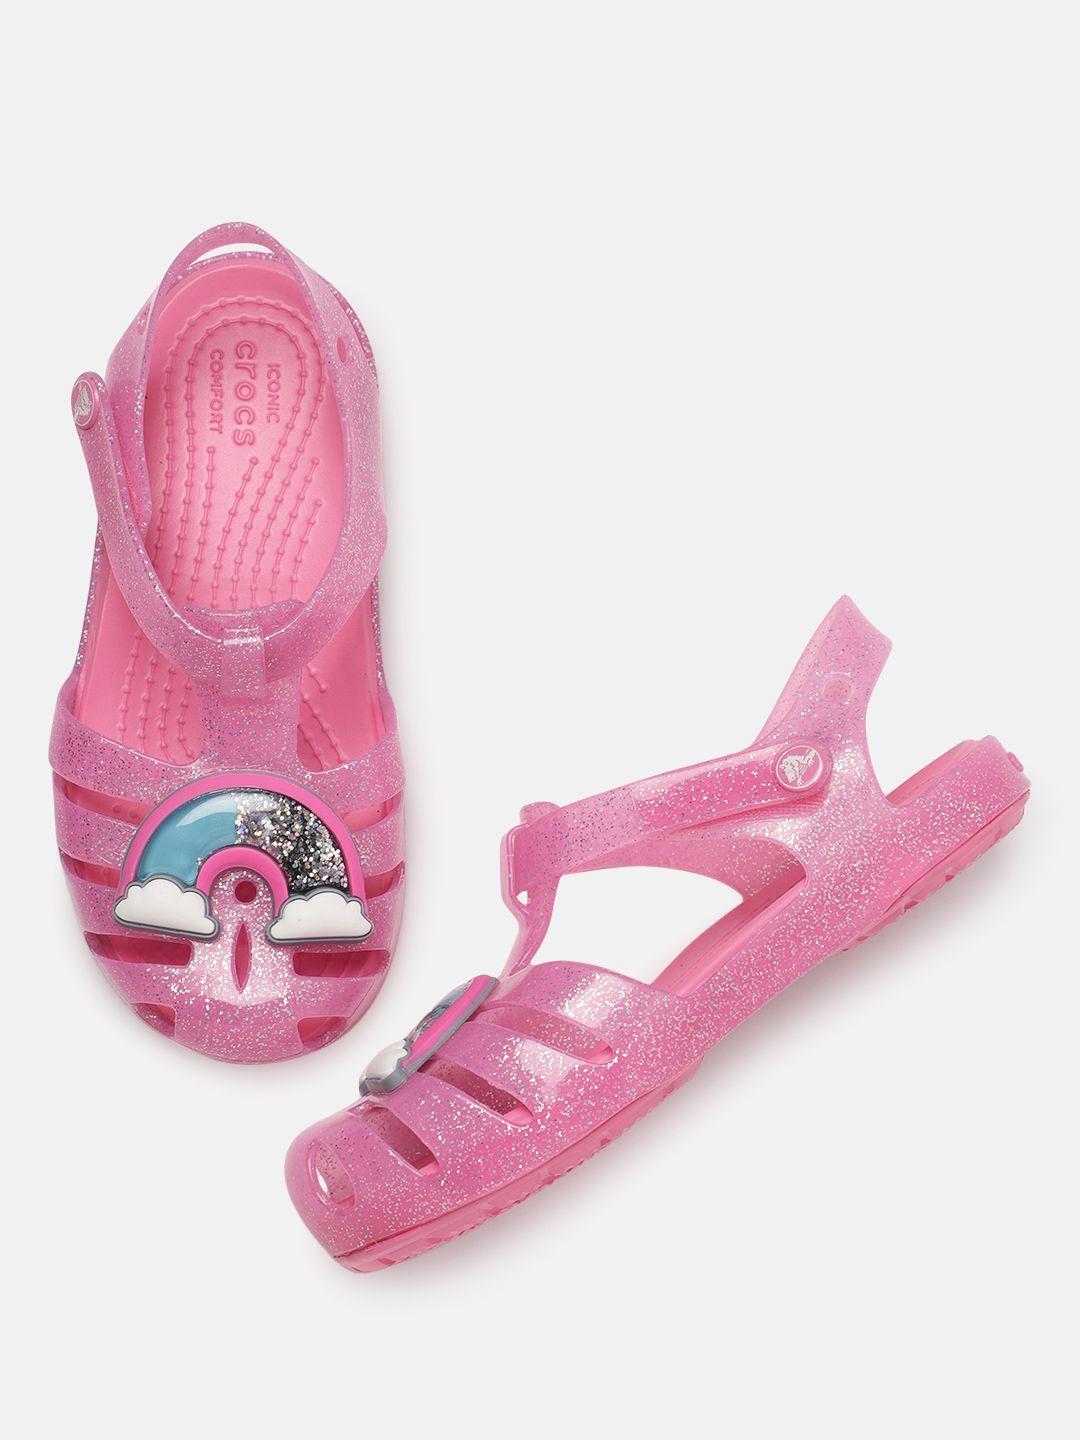 crocs-kids-pink-isabella-charm-embellished-open-toe-flats